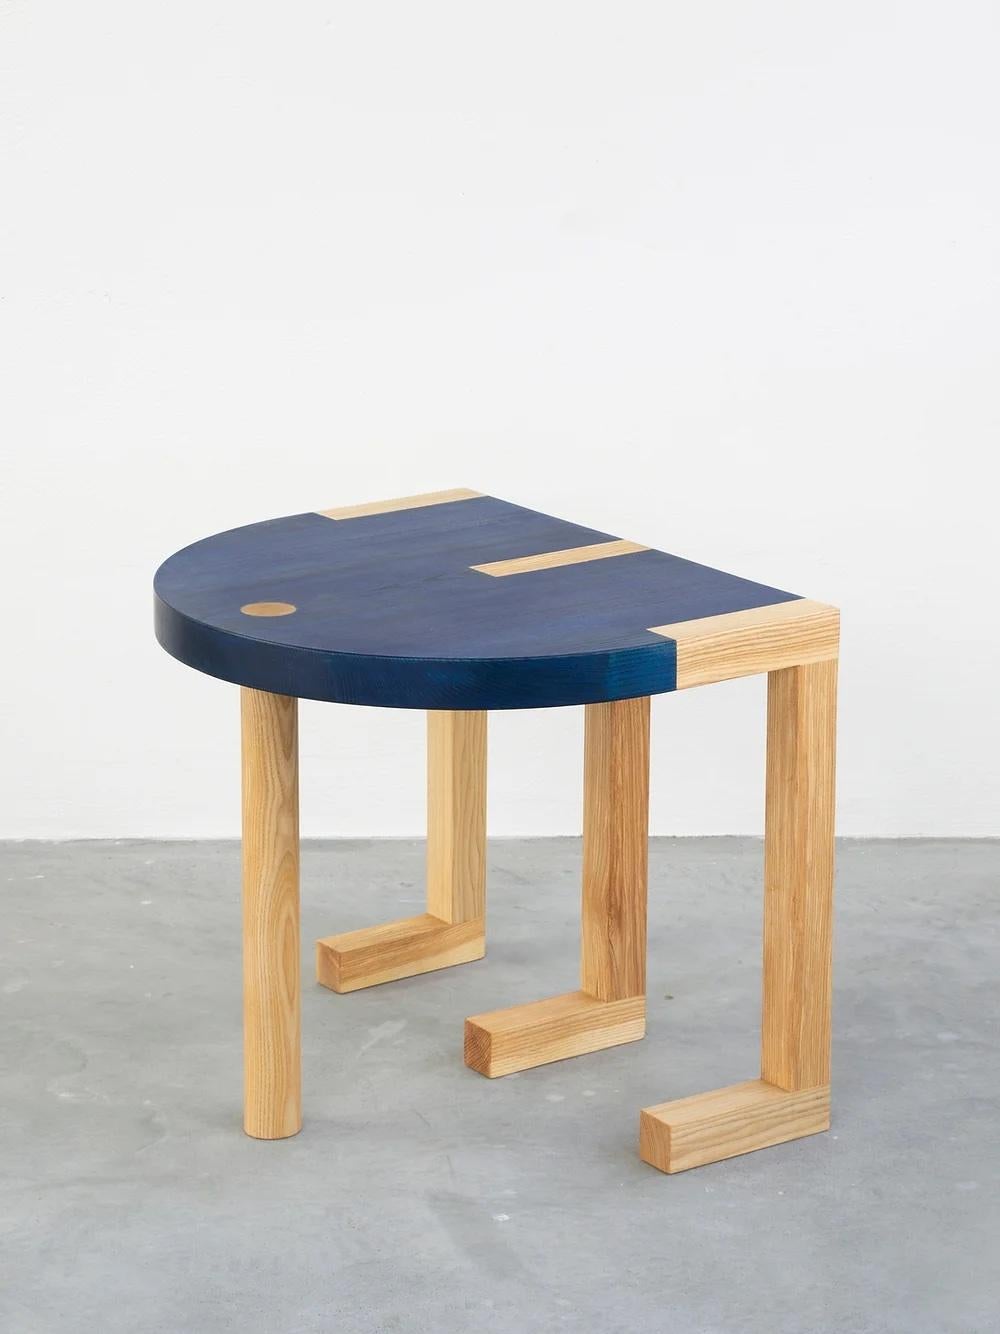 Organic Modern Contemporary Side Table 'TRN 3' by Pani Jurek, Black & Natural wood, Ash Wood For Sale